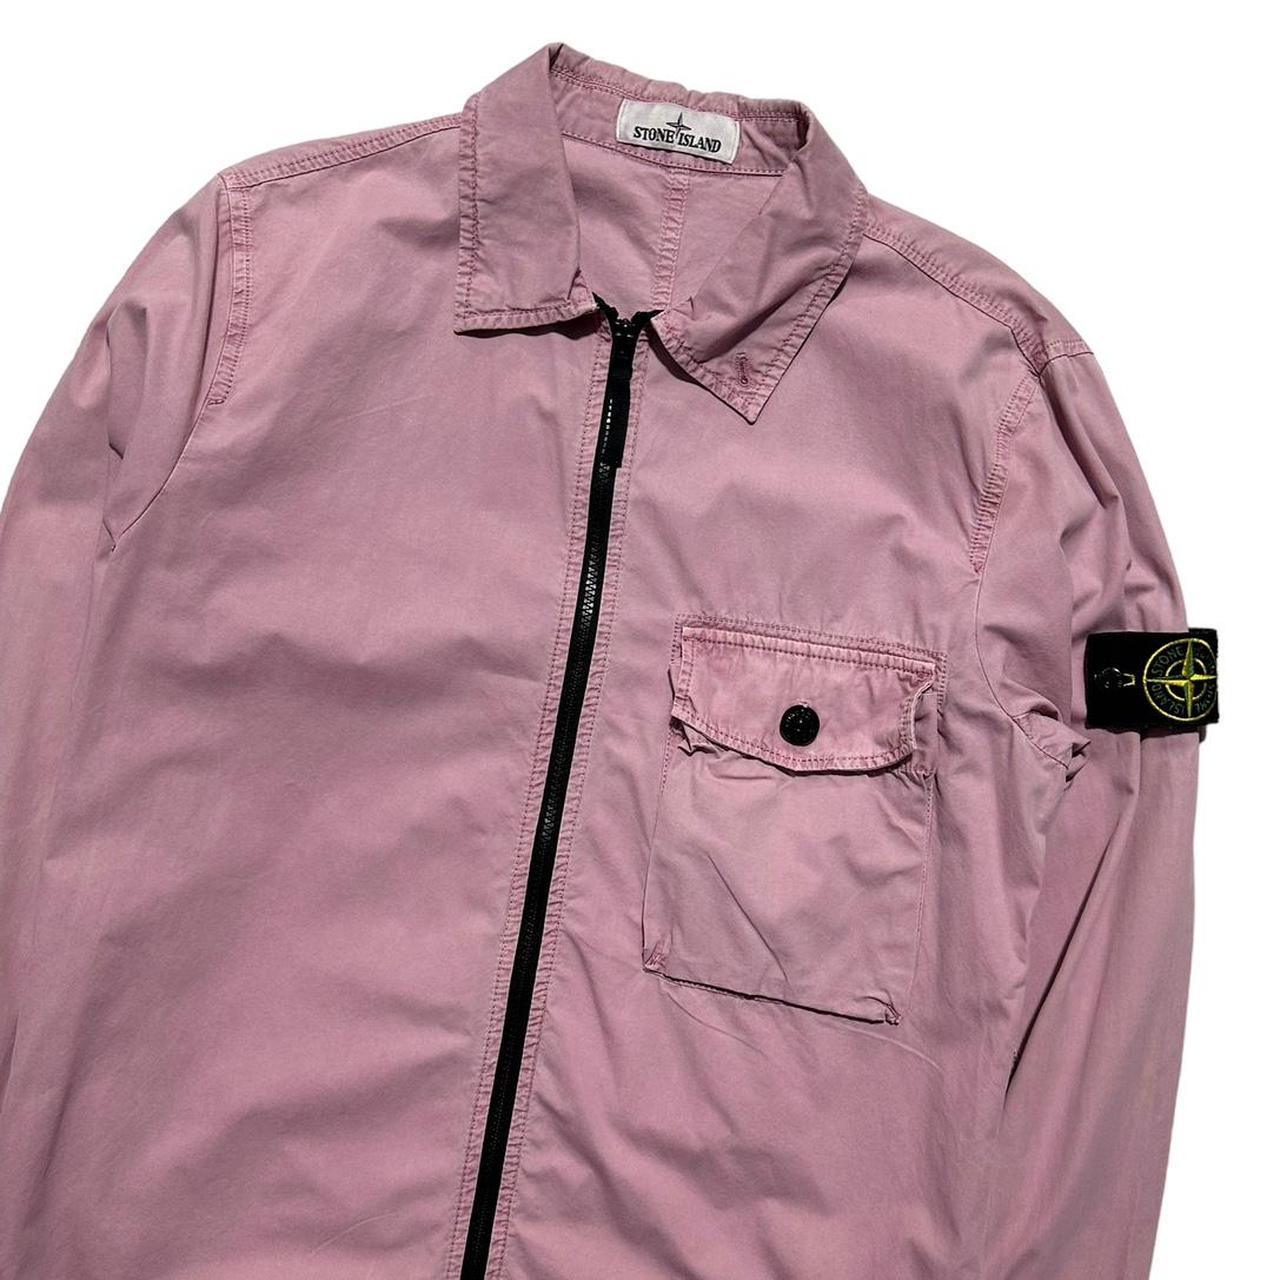 Stone Island Single Pocket Pink Overshirt - Known Source